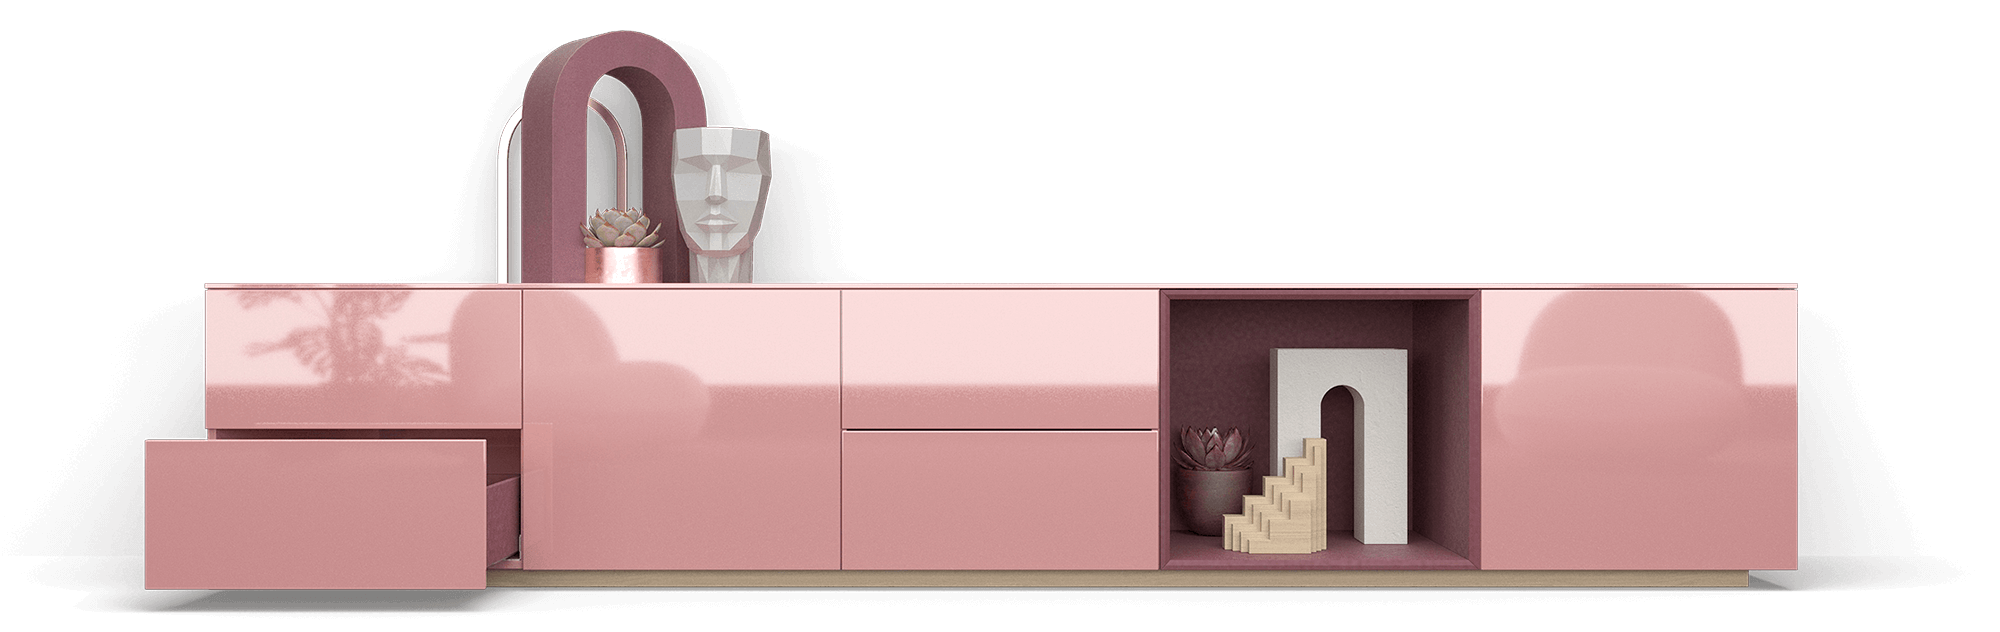 Roze dressoir met lades